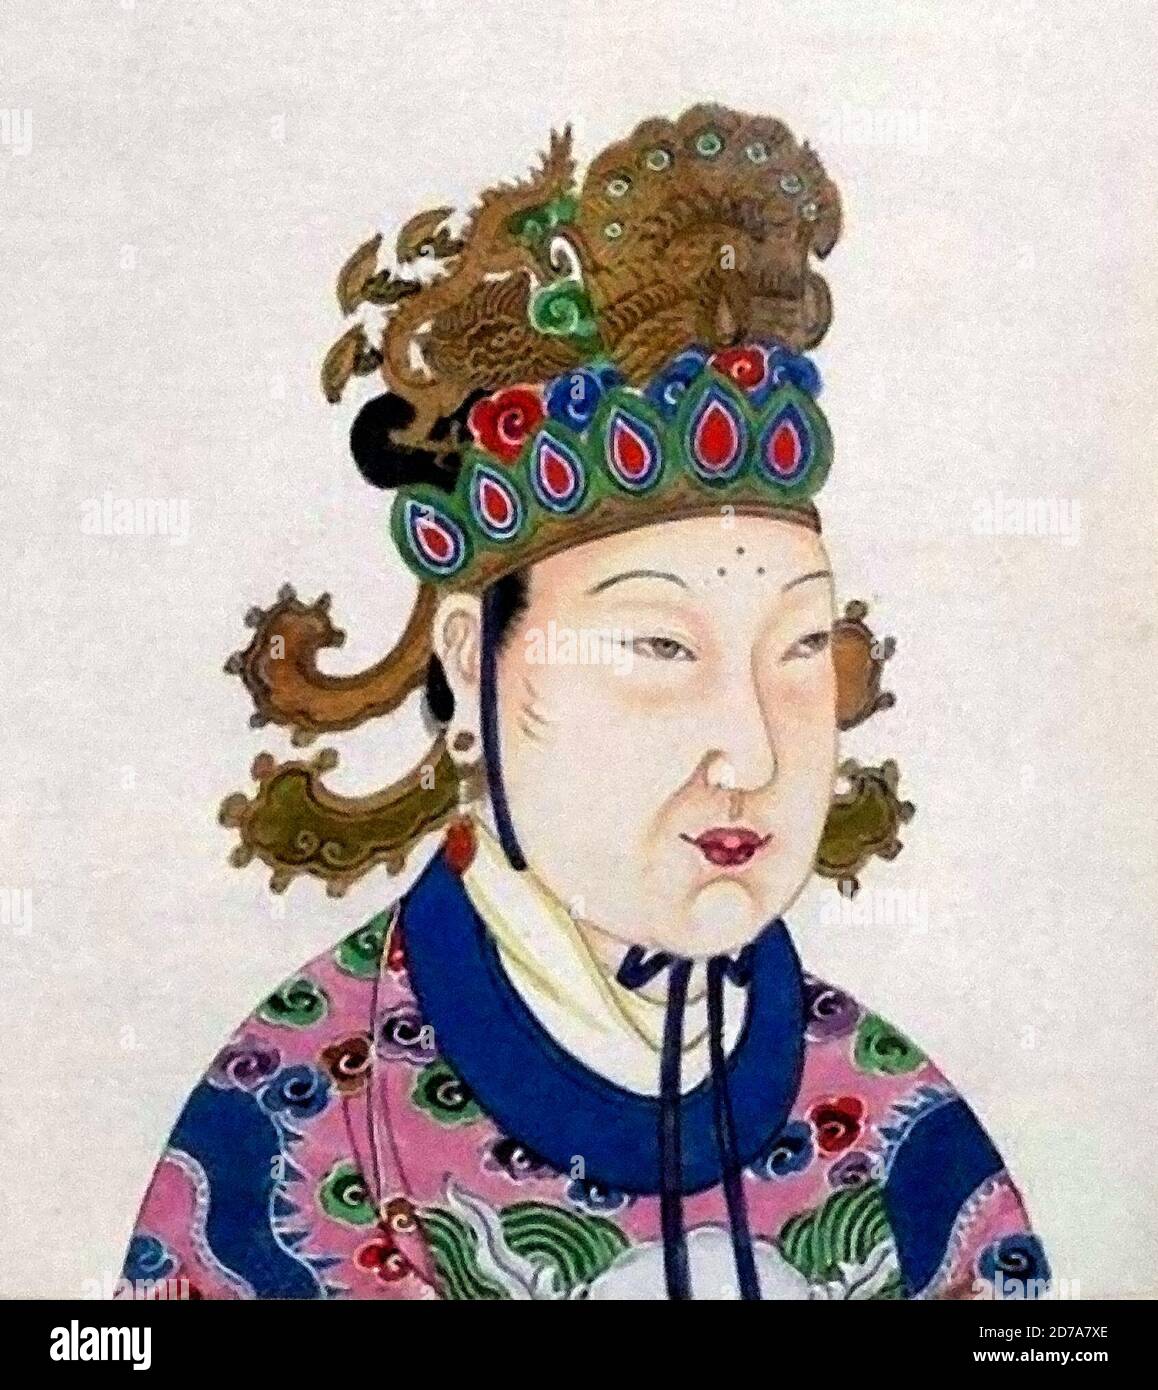 Wu Zetian. Portrait de l'impératrice Wu Ze Tian (ou Wu Zhao ou Wu Hou, 624-705), illustration du XVIIIe siècle Banque D'Images